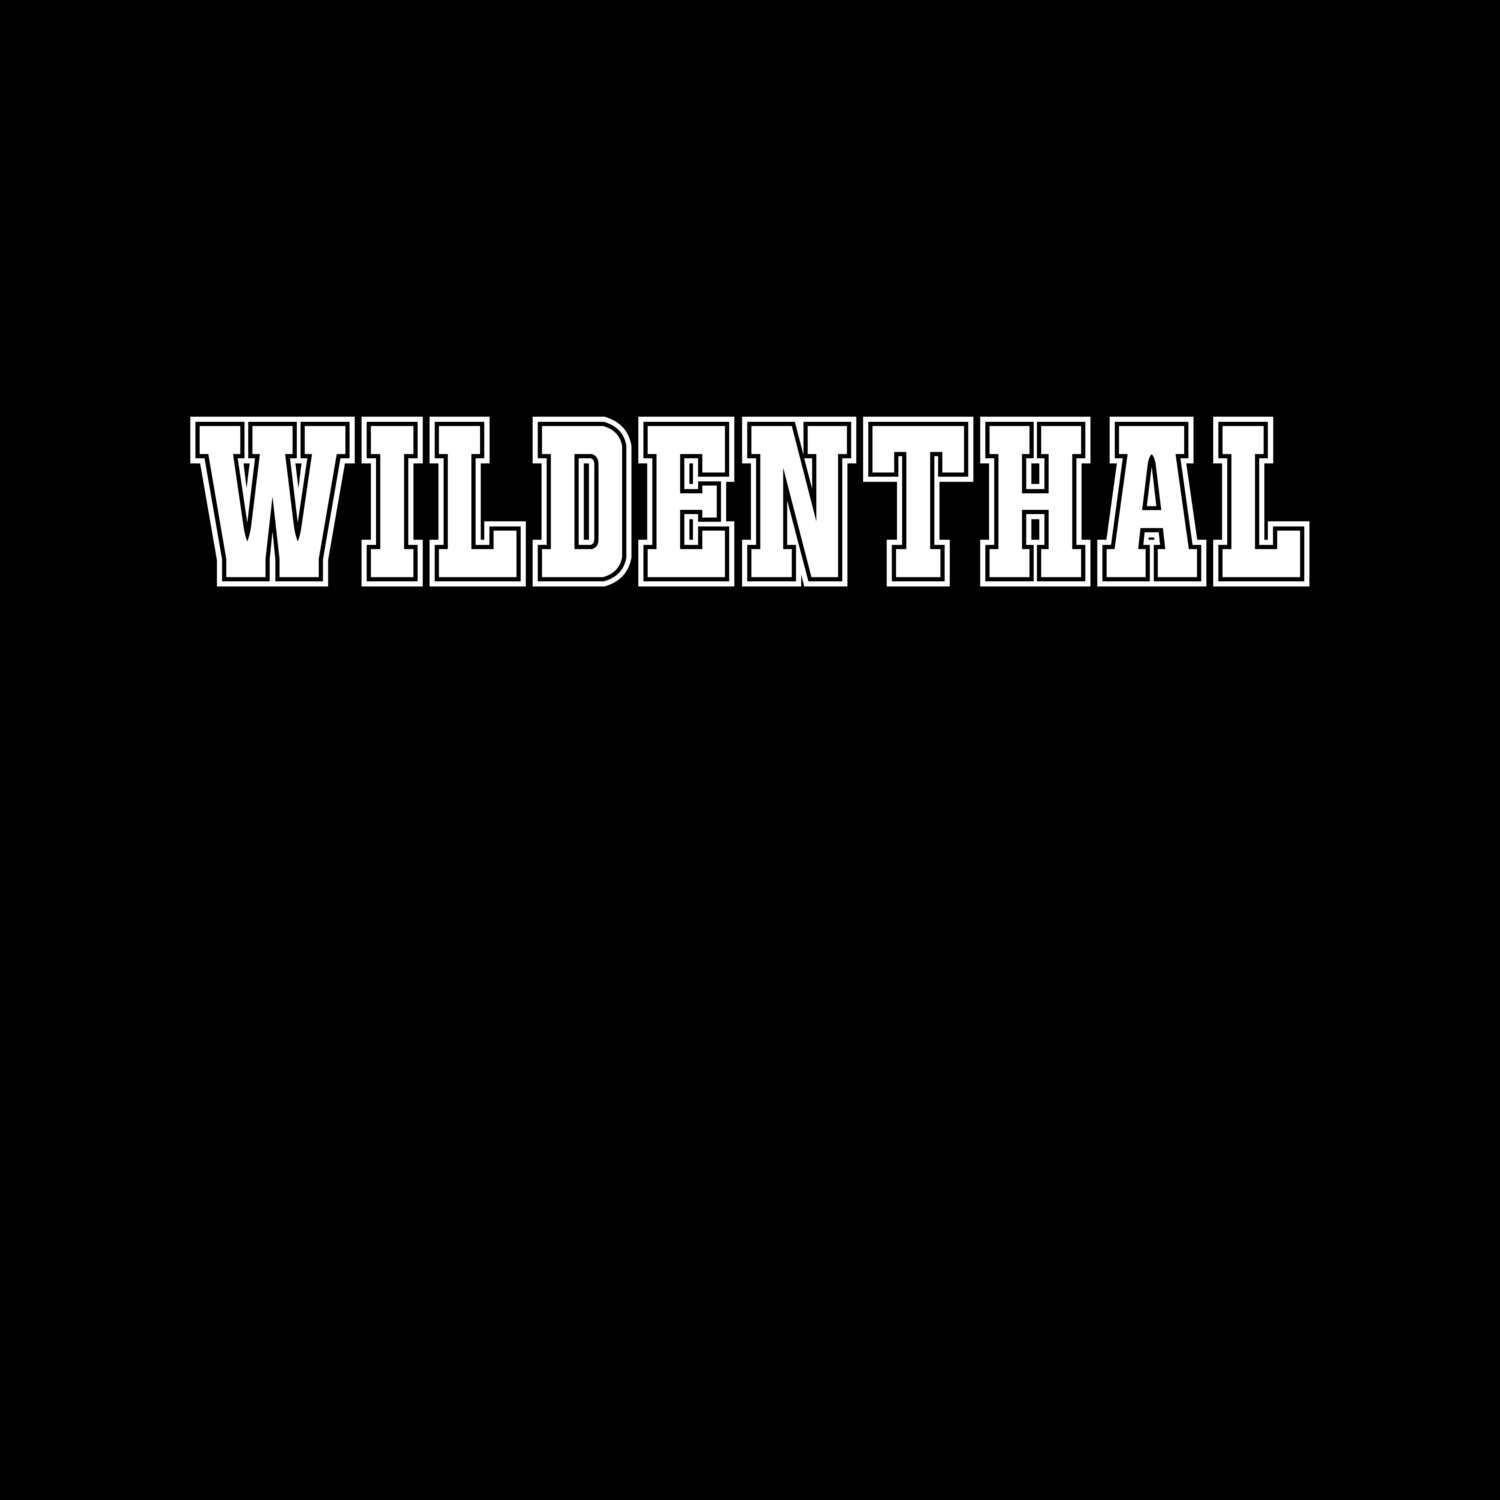 Wildenthal T-Shirt »Classic«